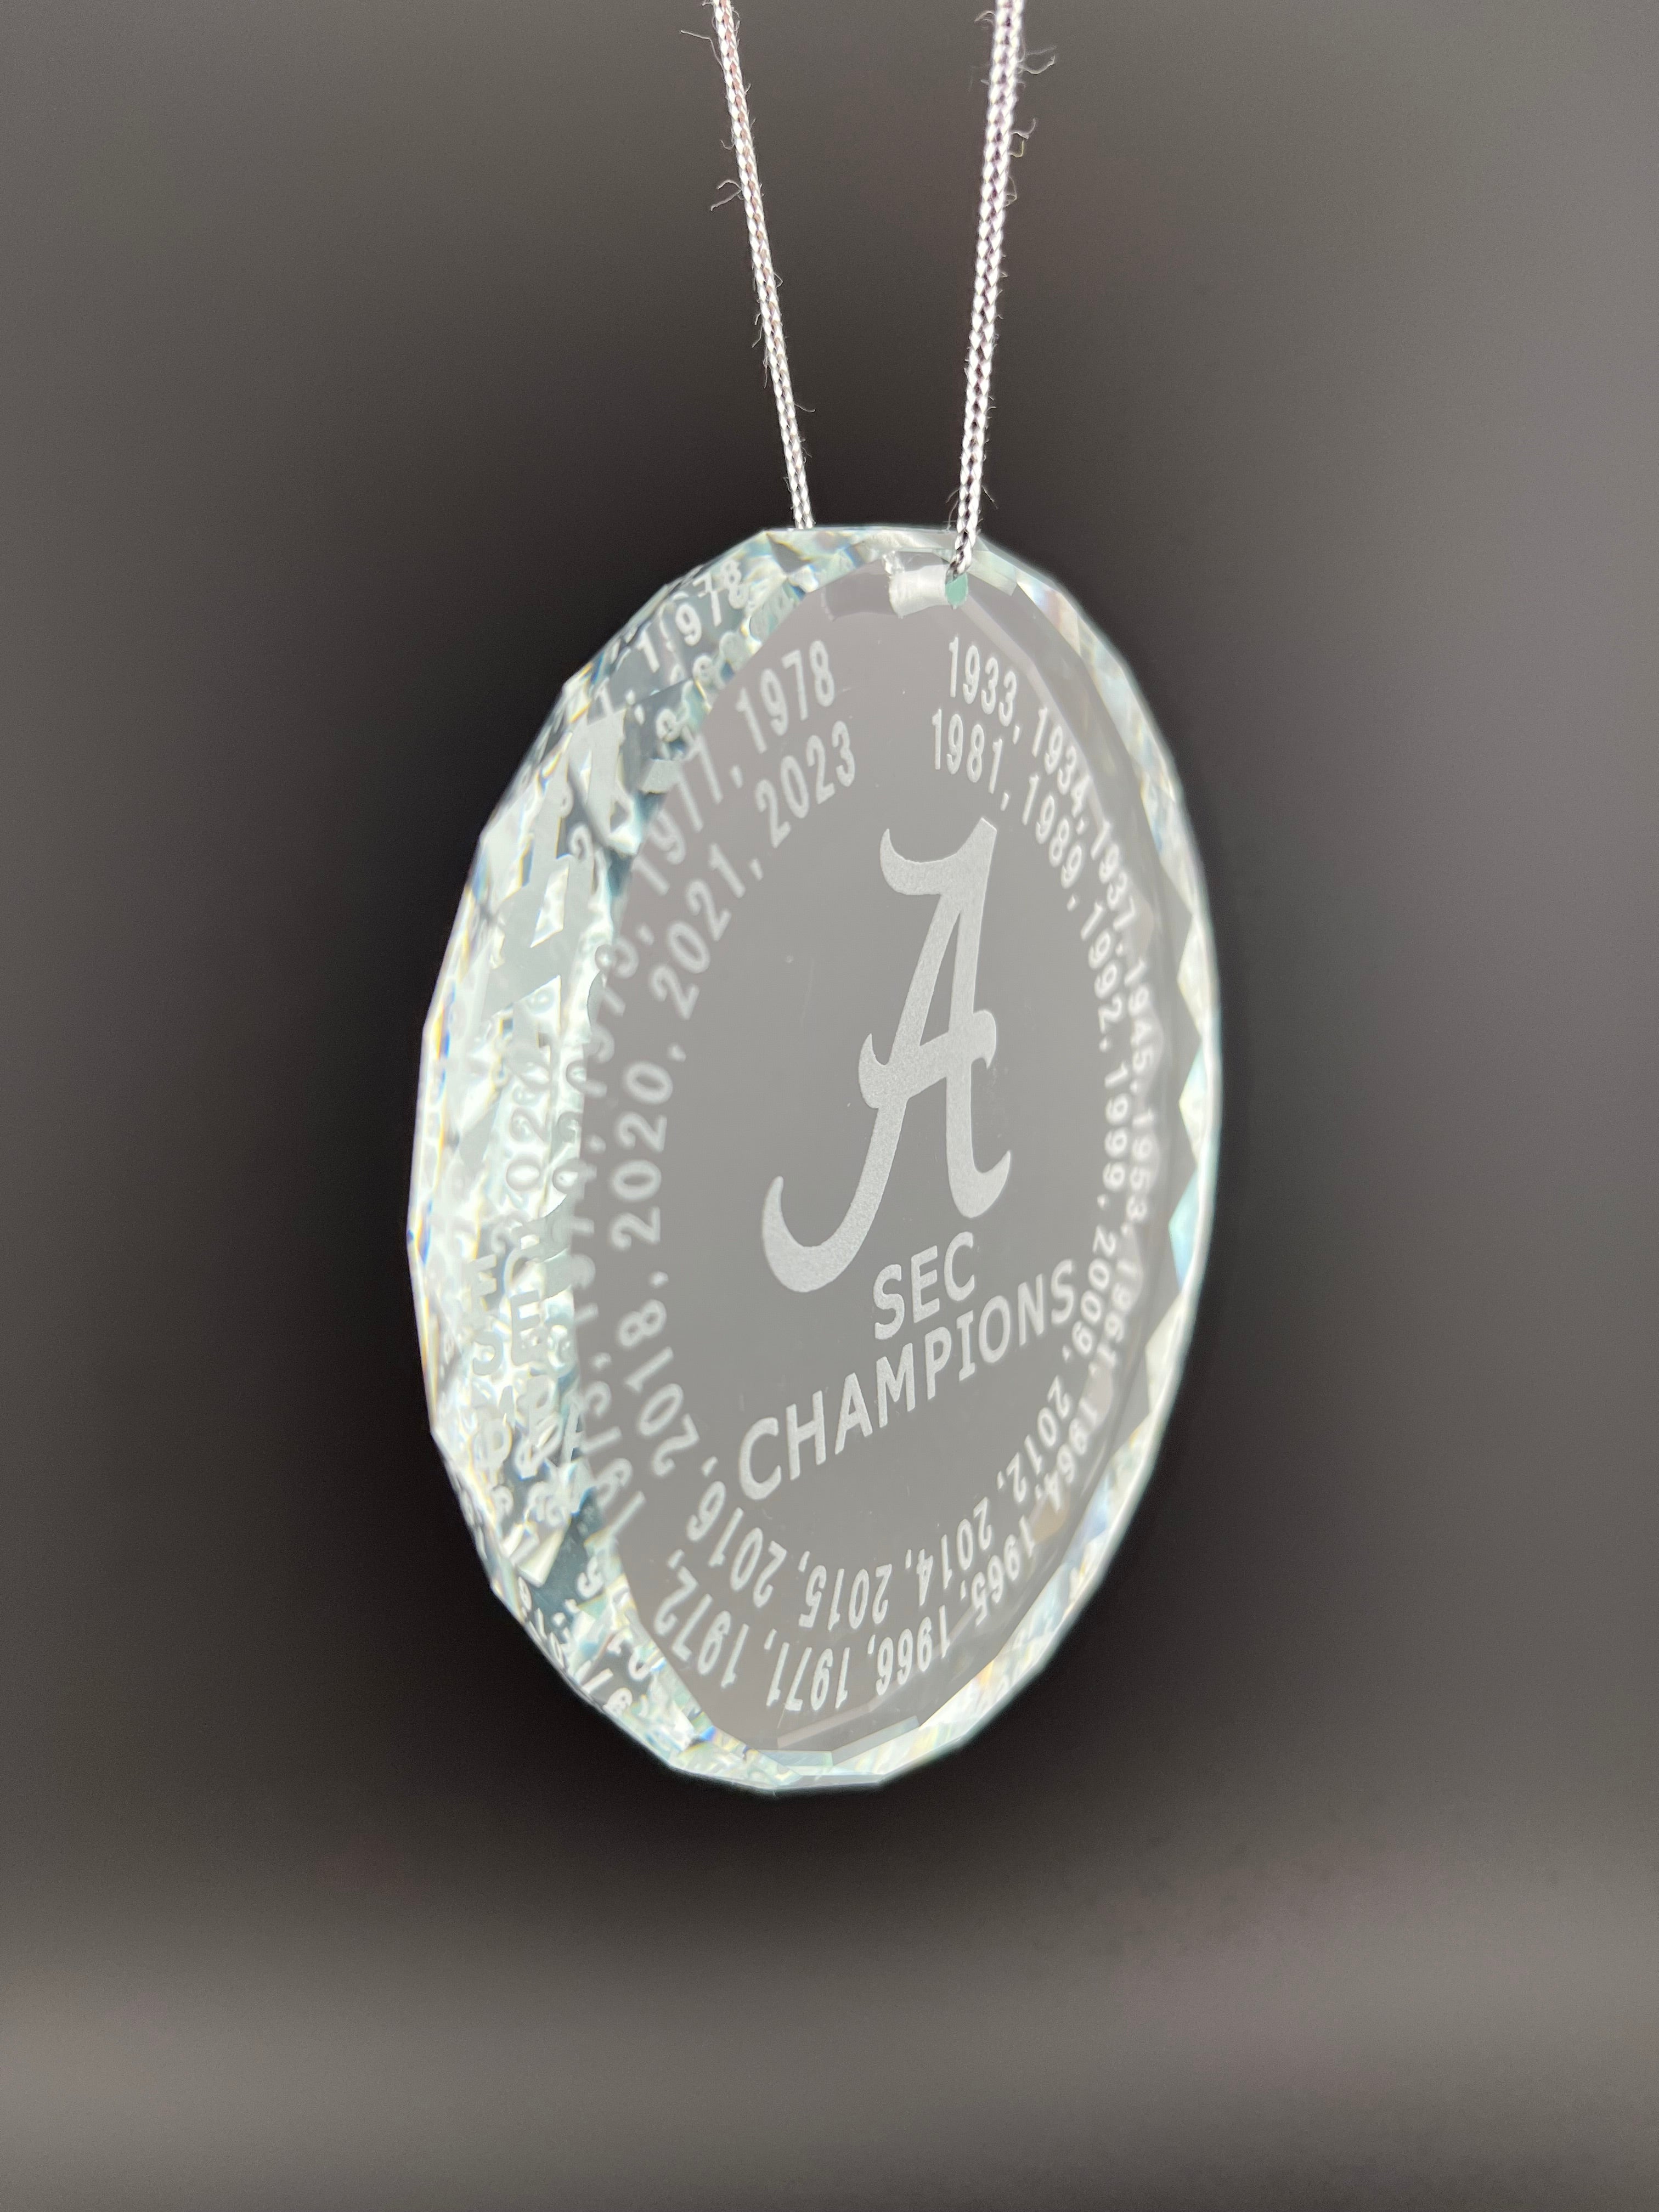 Alabama Bama Crimson Tide NCAA SEC champions 2023 K9 Optical Crystal Ornament